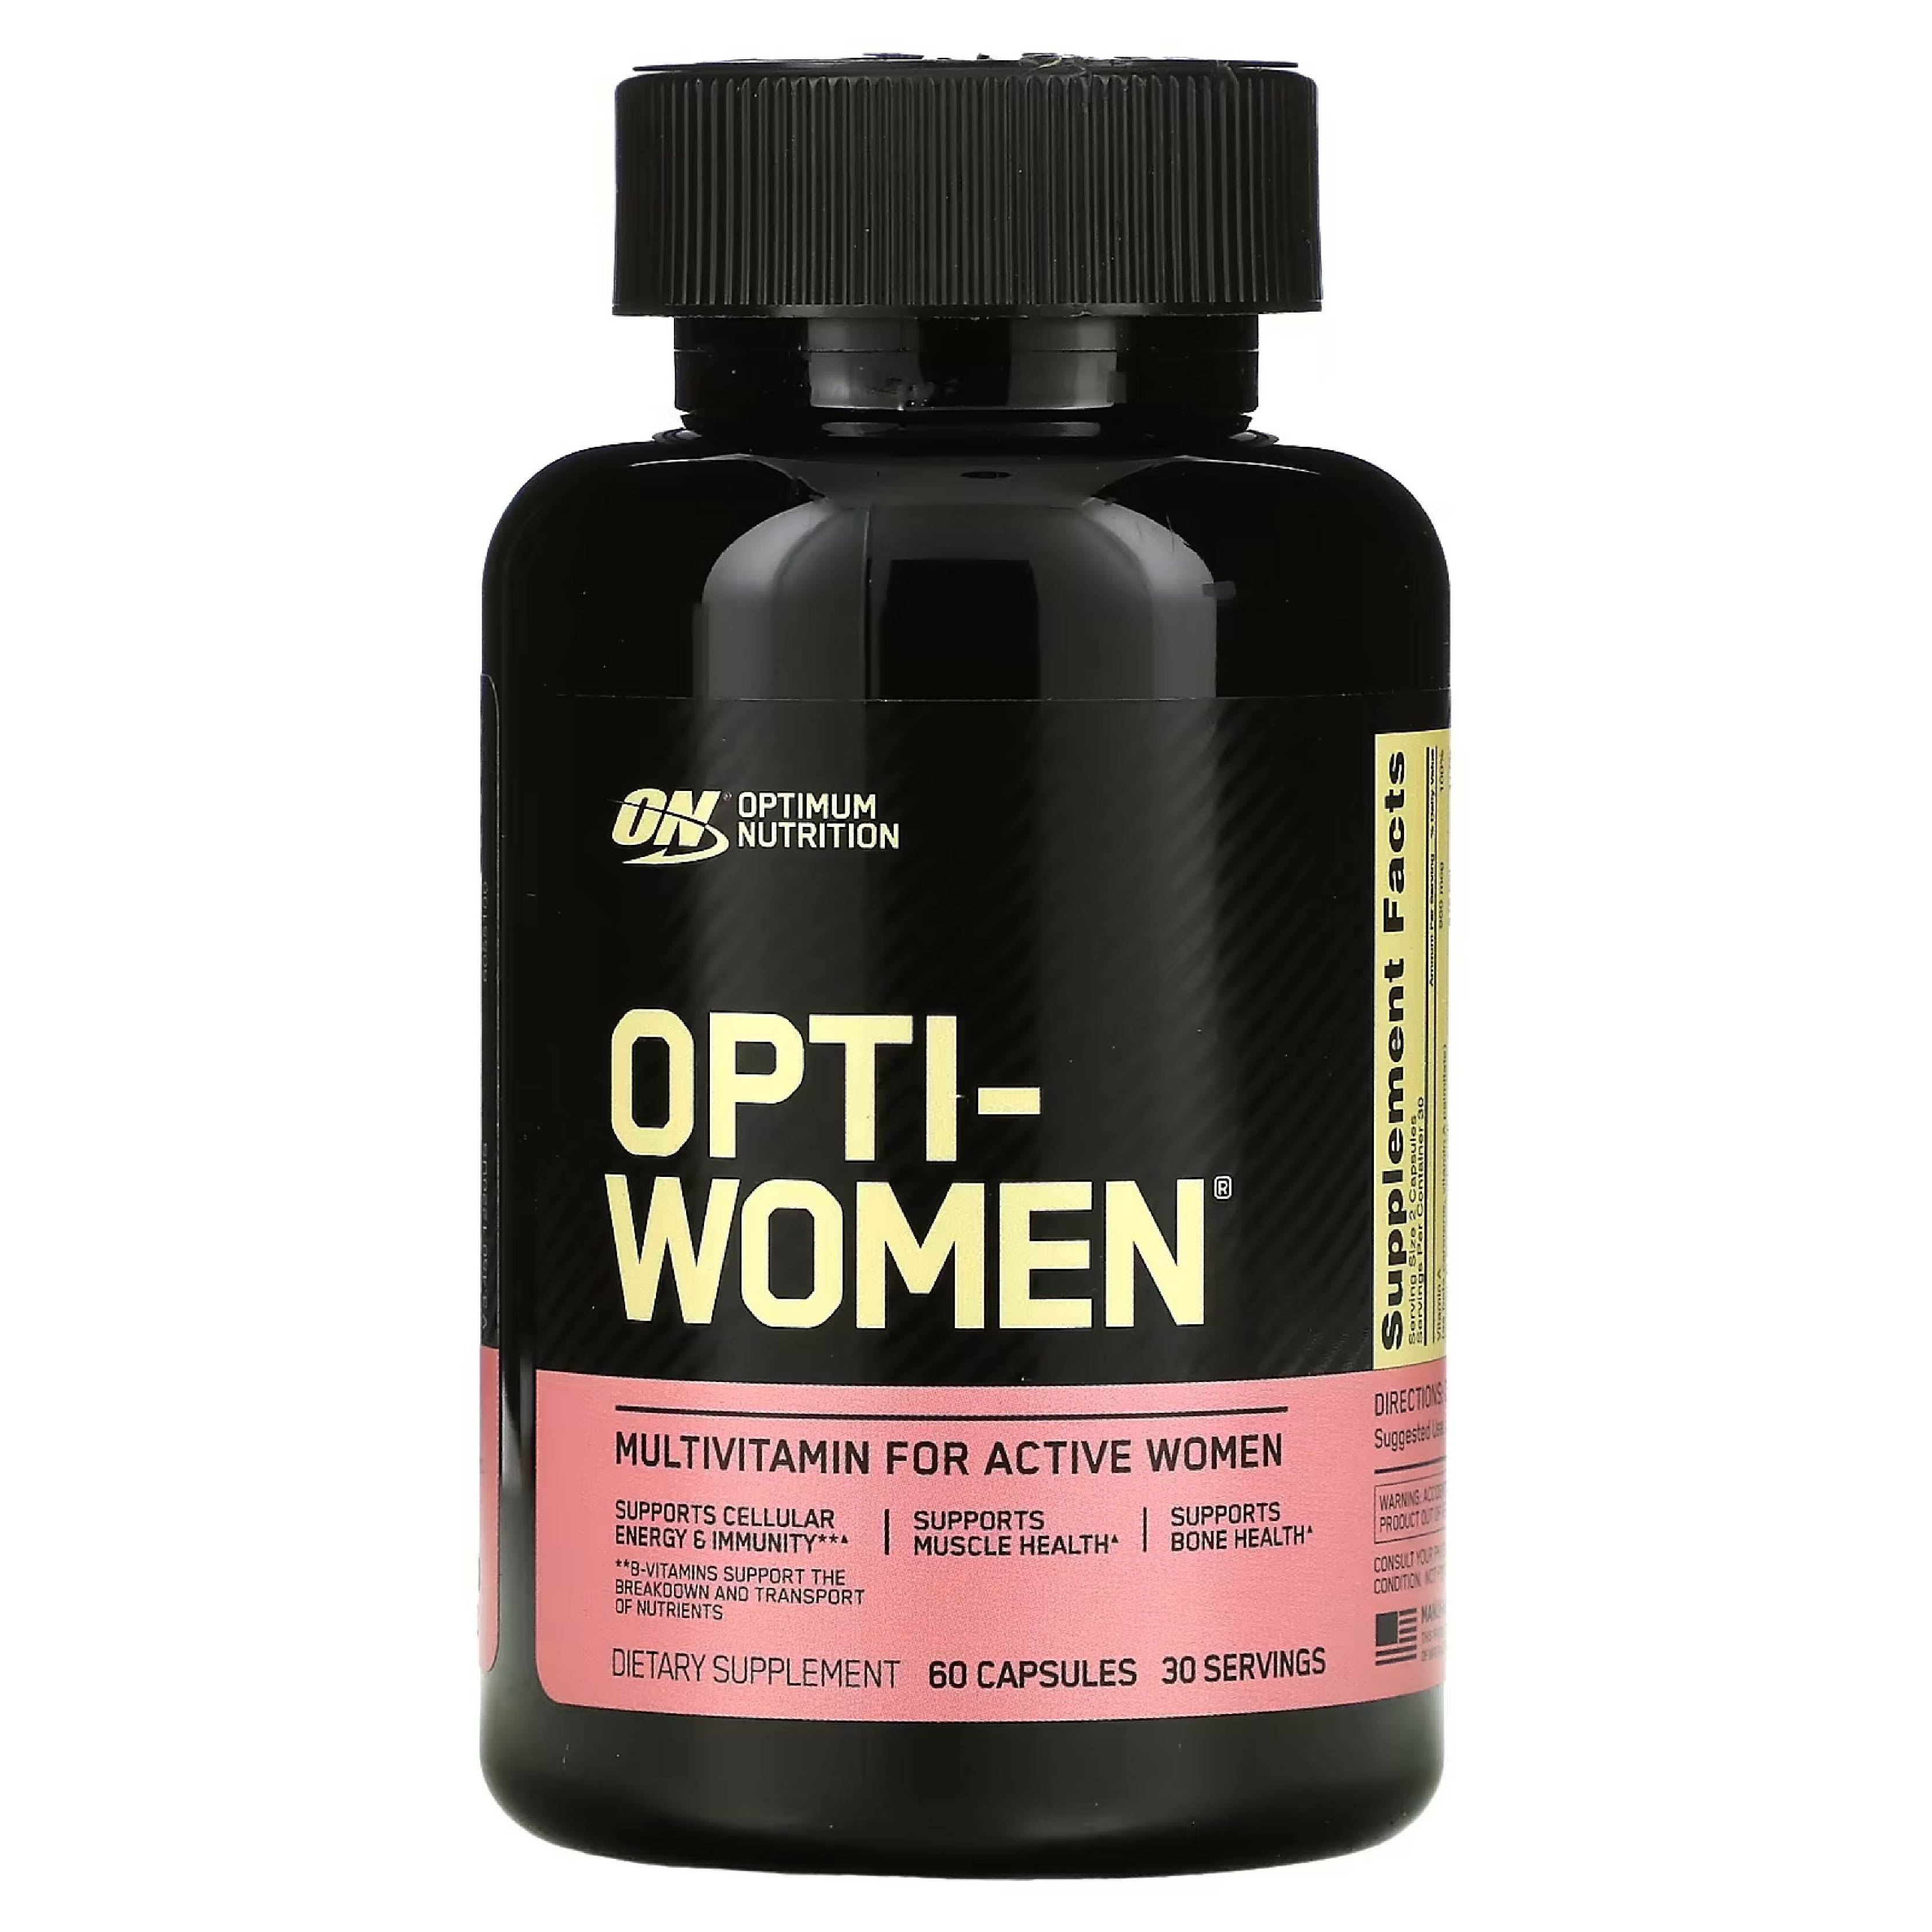 OPTI WOMEN 60 TABLETAS – OPTIMUM NUTRITION